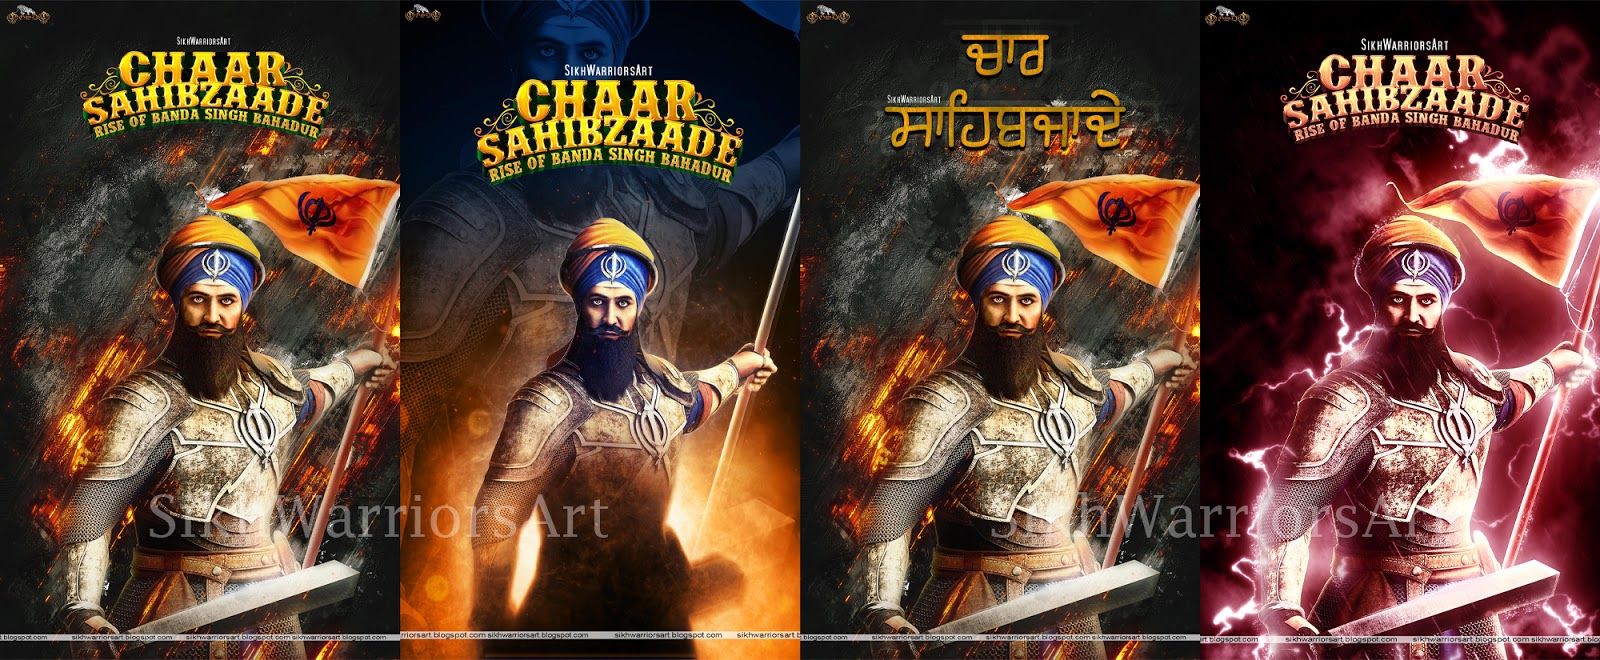 Sikh Warriors: Chaar Sahibzaade 3D HD Movie Wallpaper